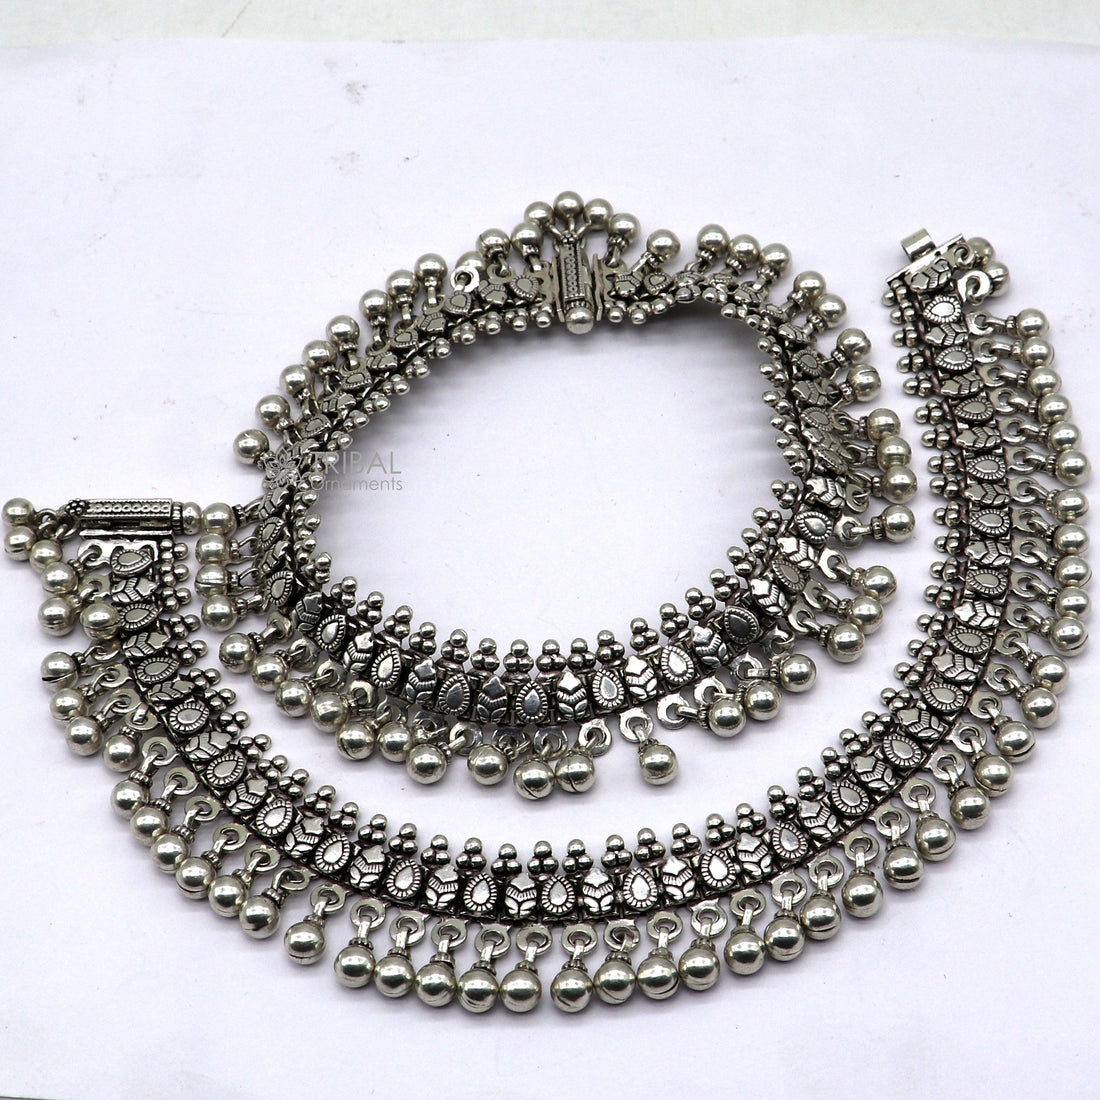 925 Sterling silver handmade vintage design stylish charming anklet foot bracelet hanging bells tribal ethnic jewelry ank620 - TRIBAL ORNAMENTS